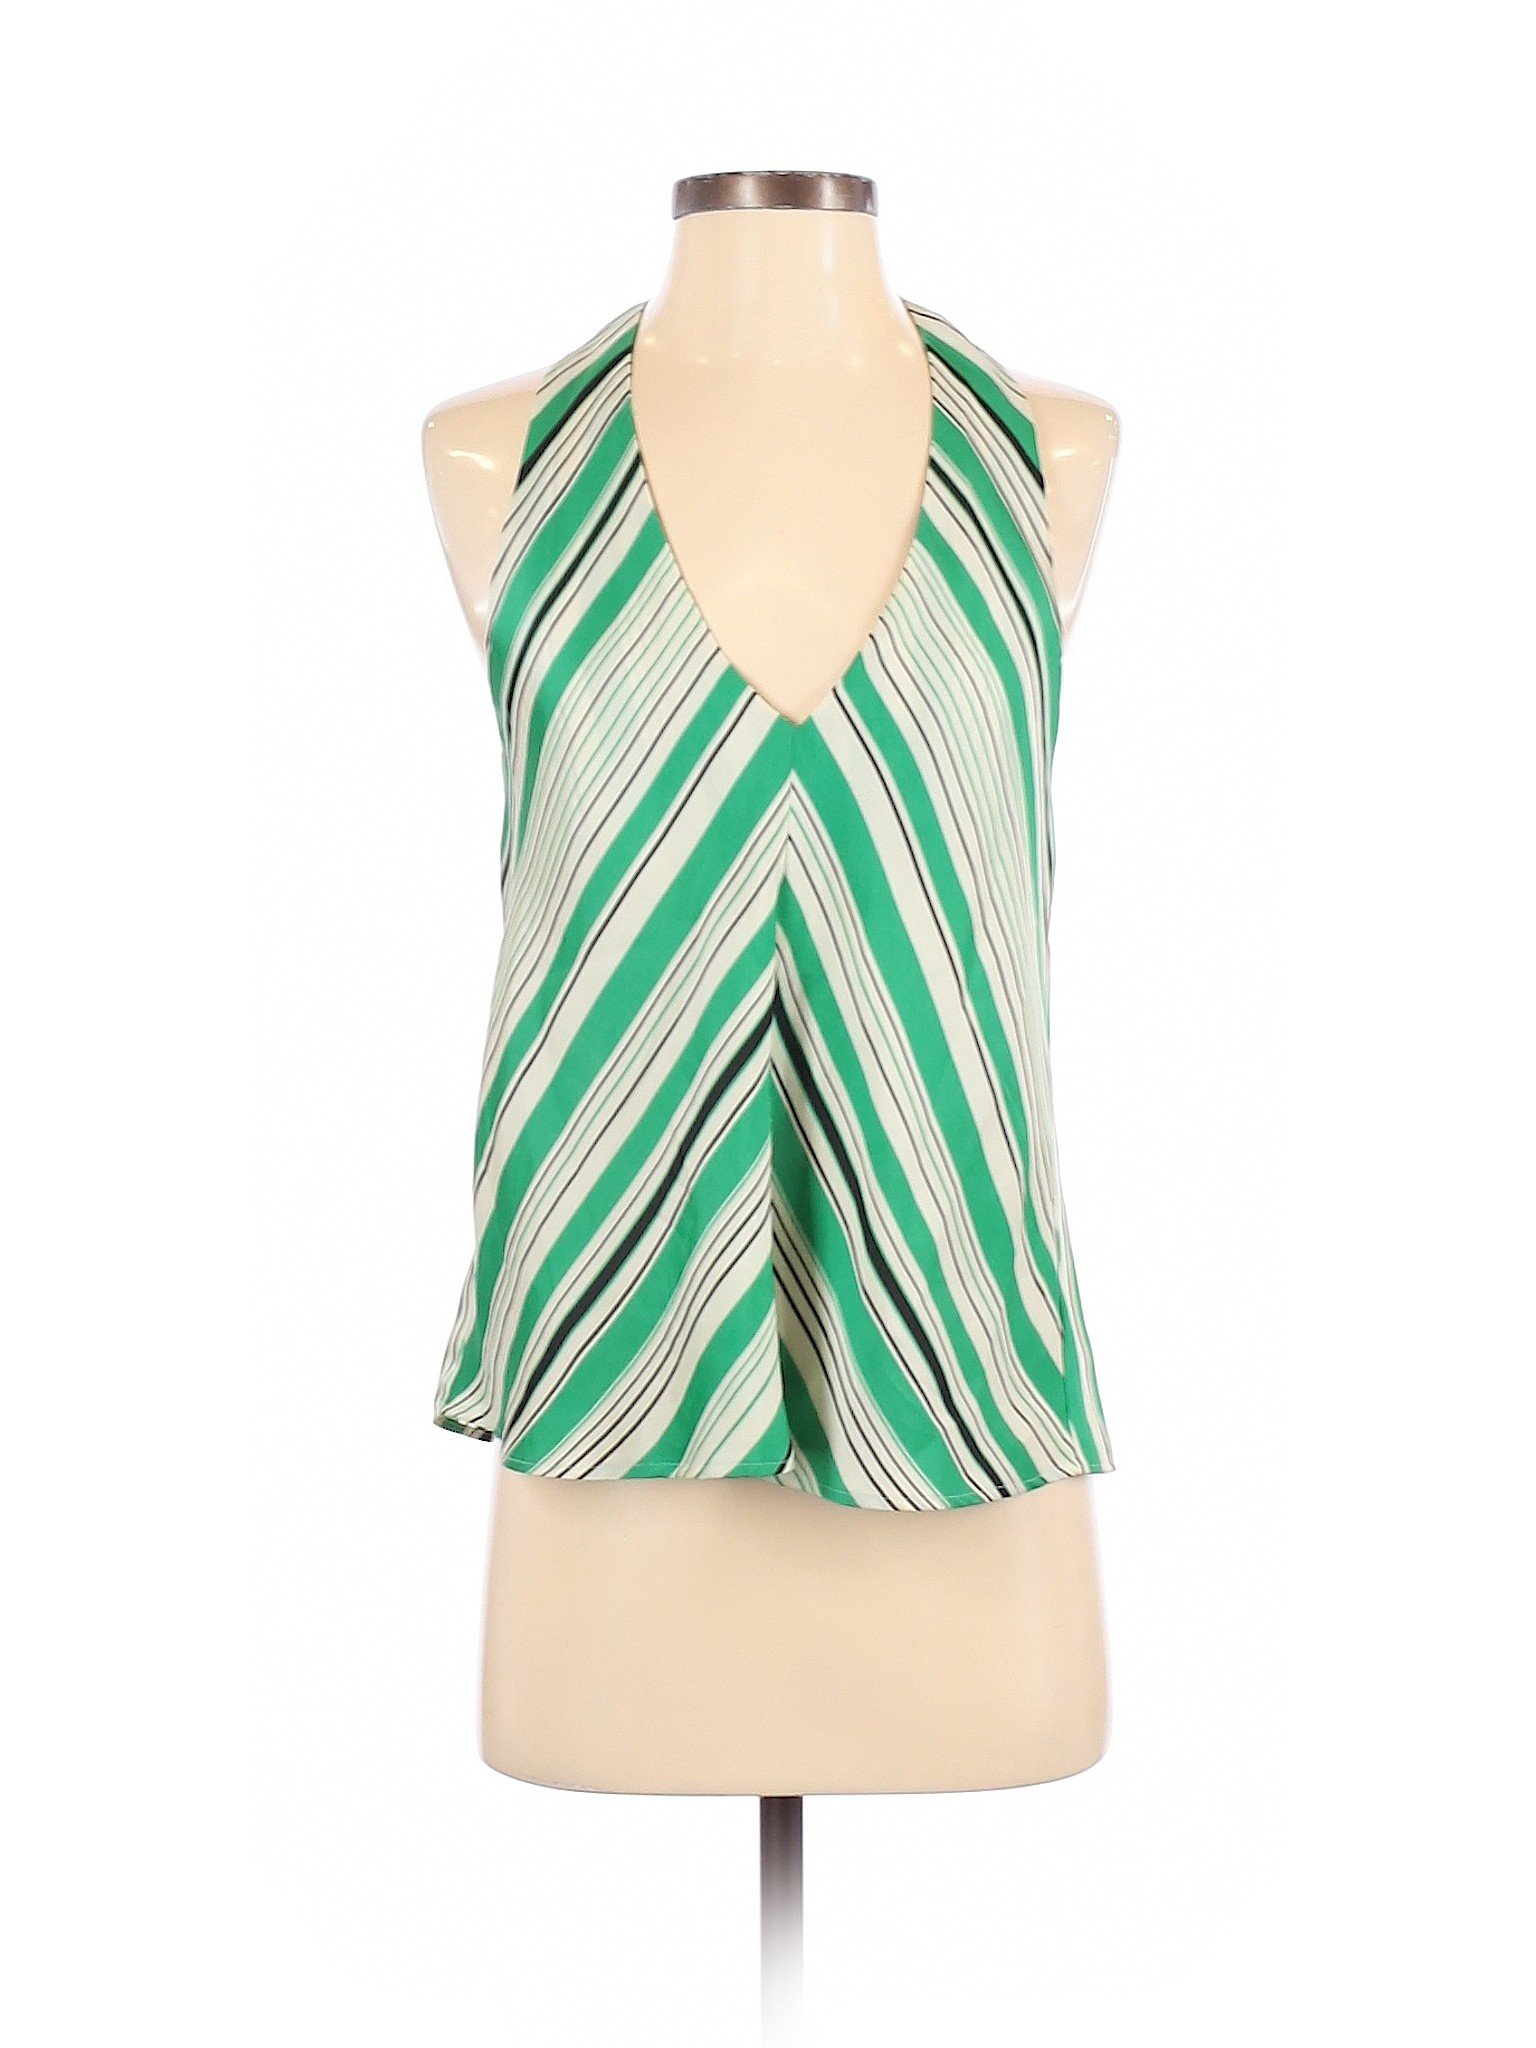 Zara Women Green Sleeveless Blouse XS | eBay